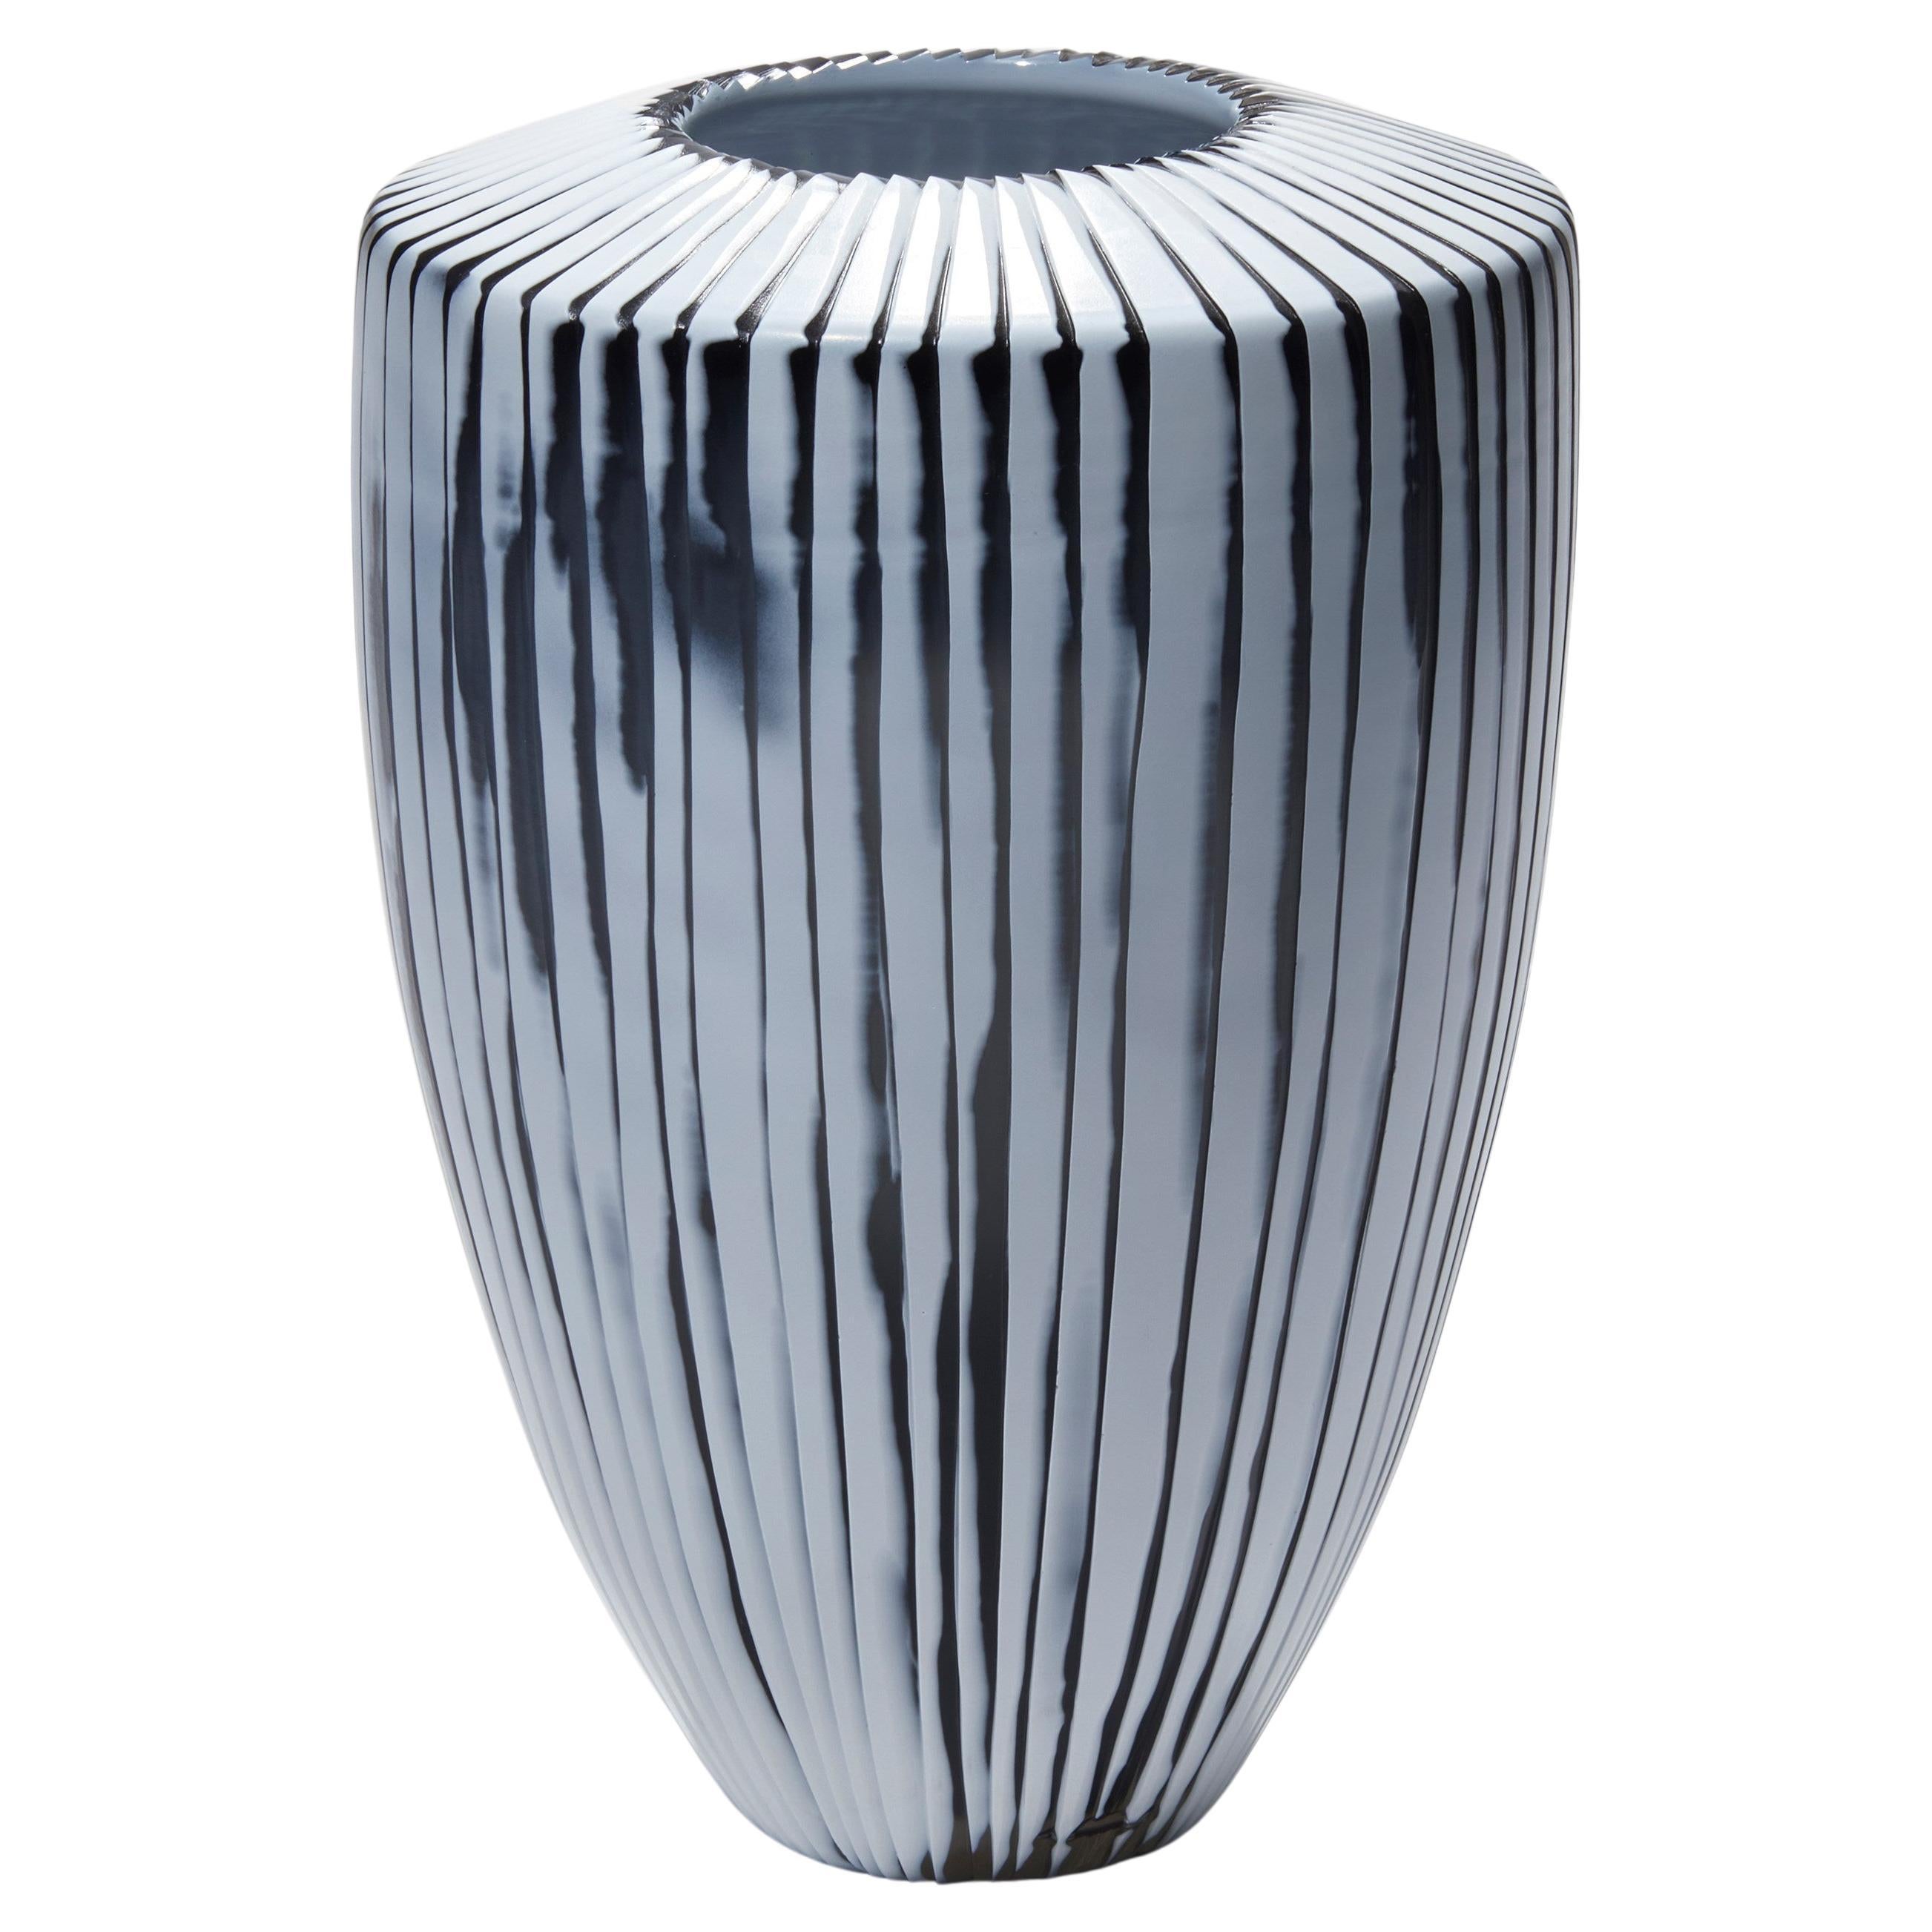 Shell II, a Unique white & slate grey Art Glass Vase by Laura Birdsall